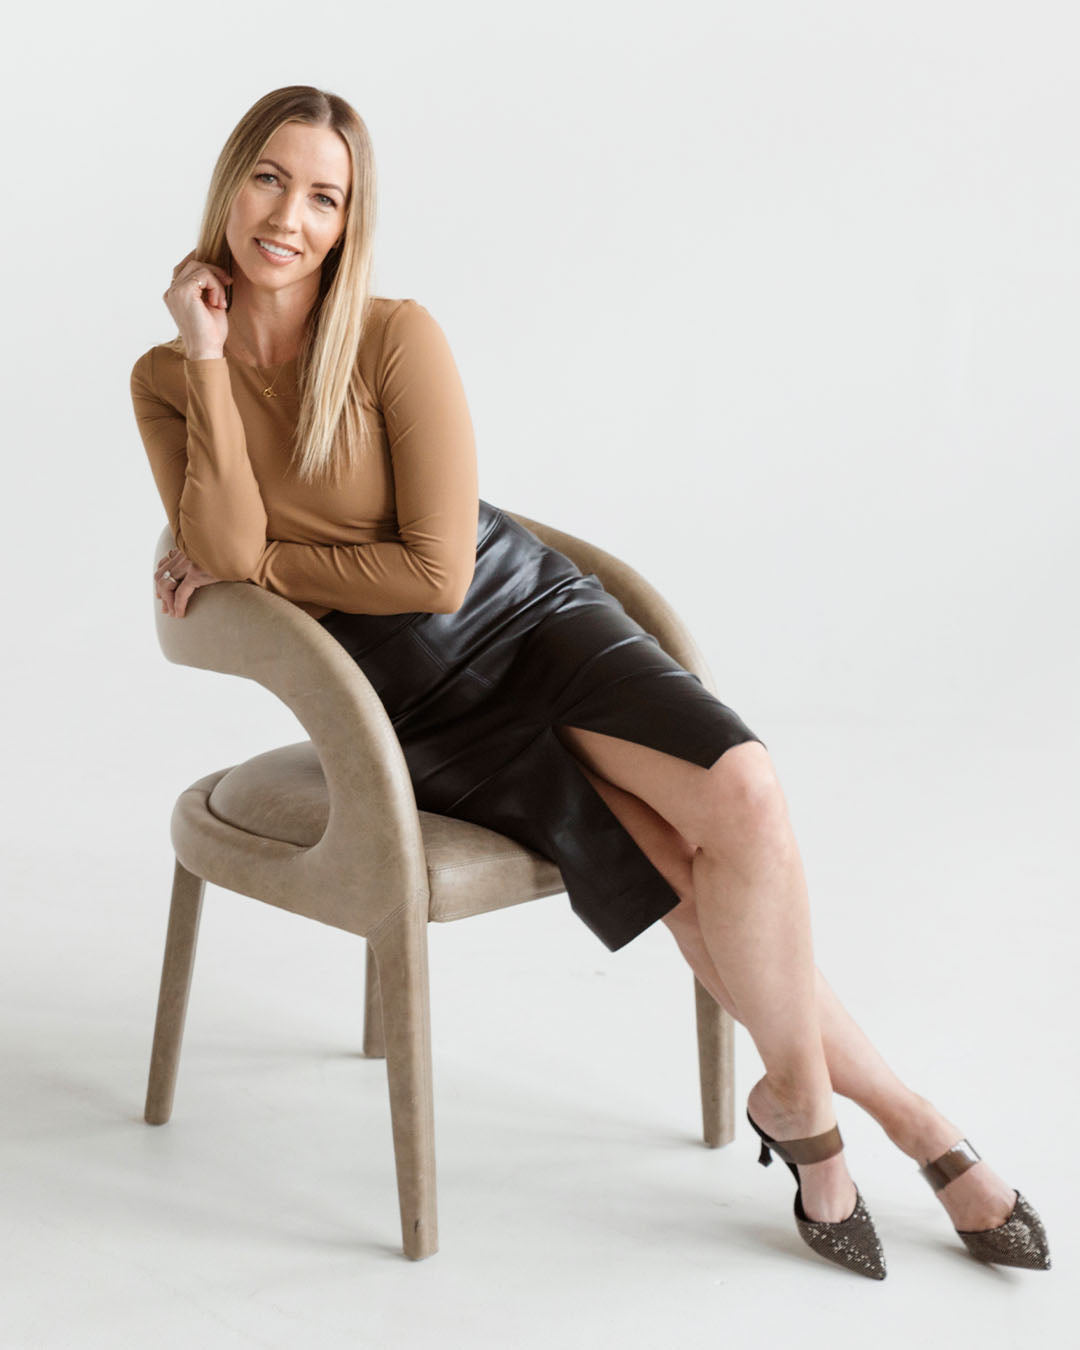 Meet Amanda Brown founder of Neves Skin Studio in Denver, CO